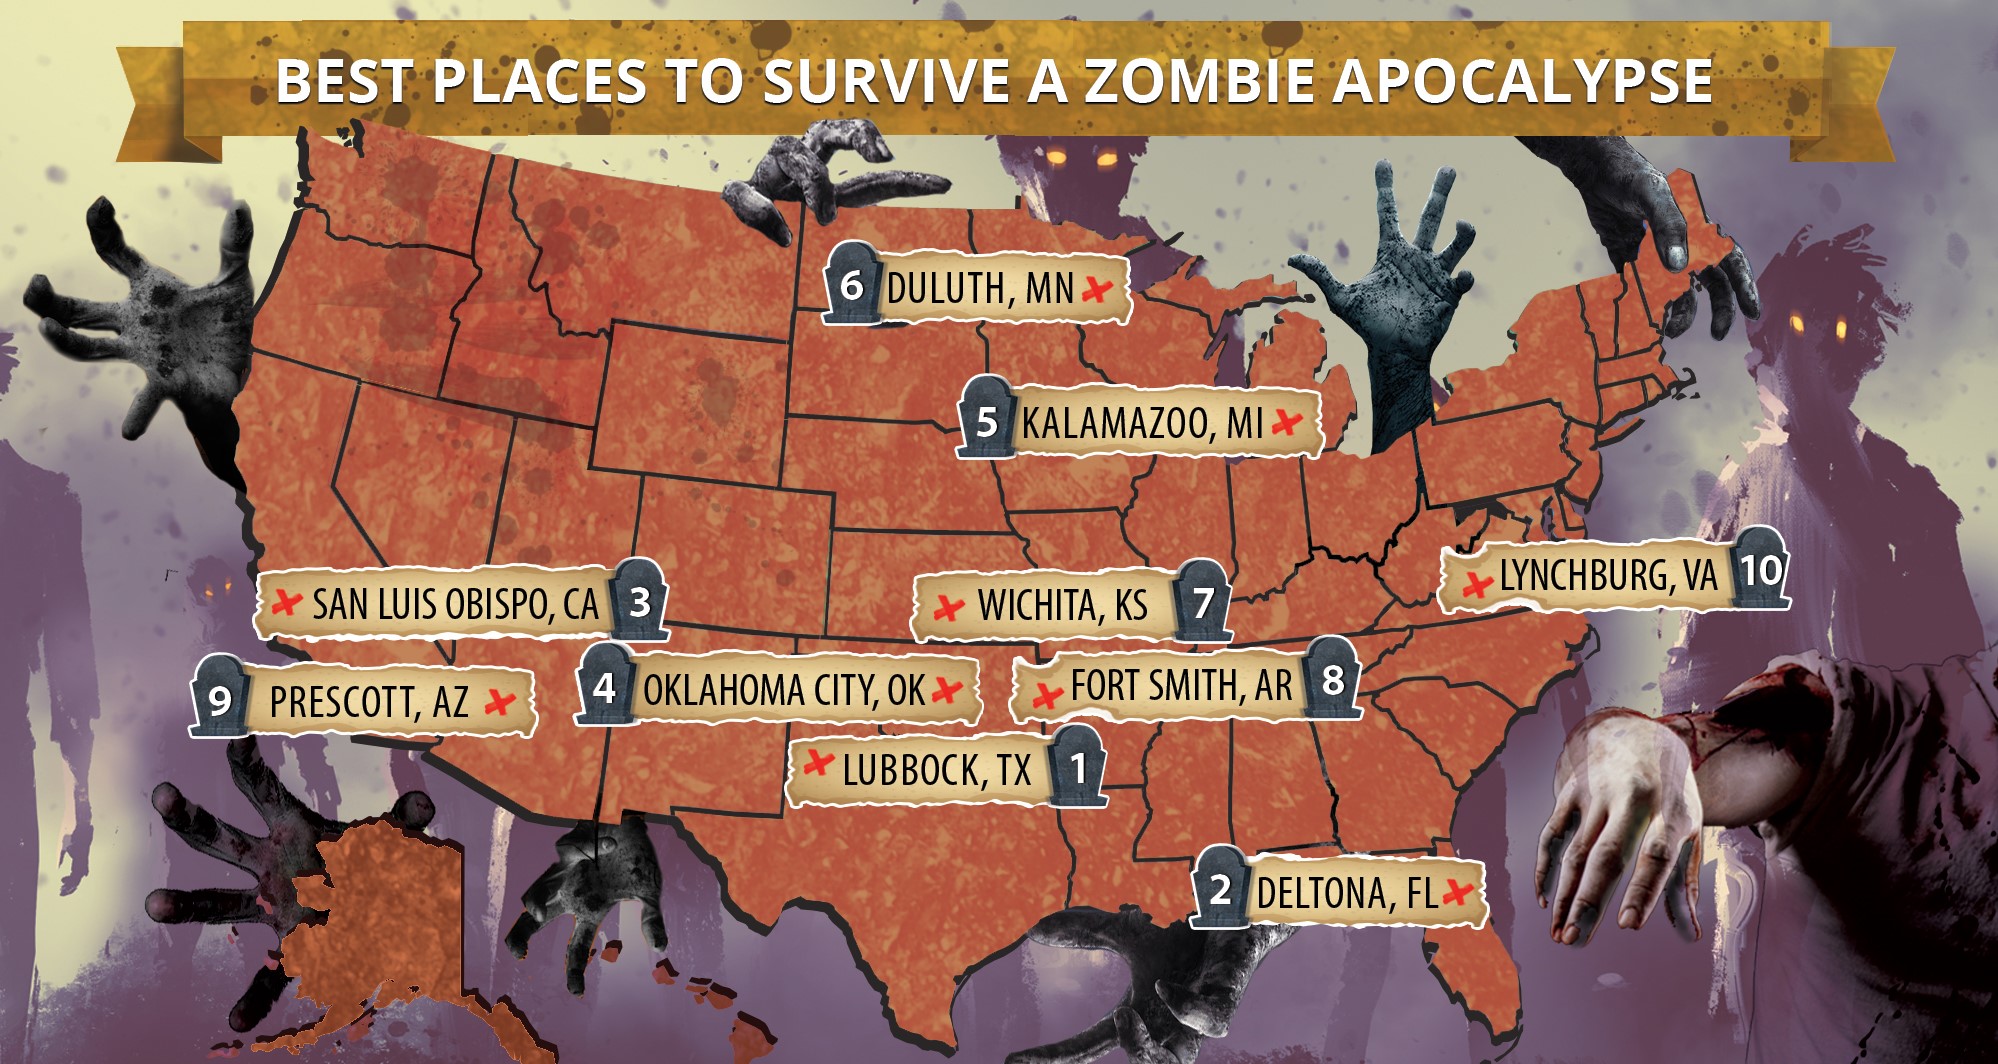 Zombie Map